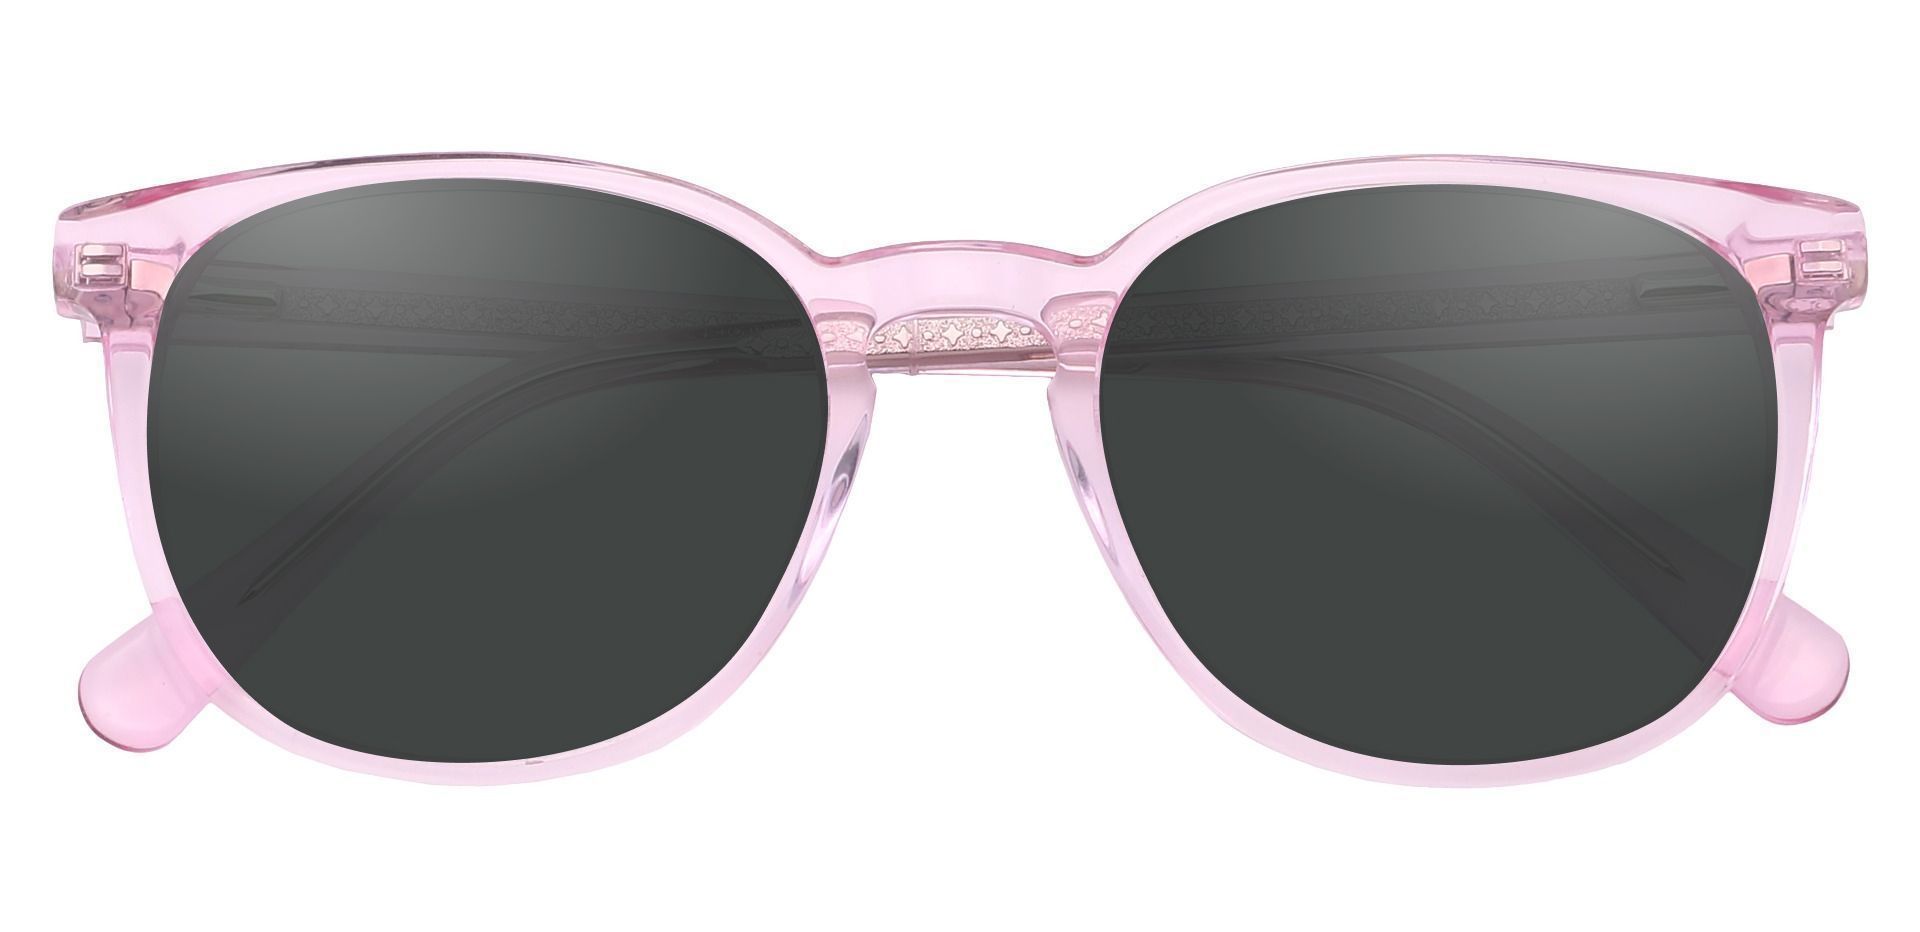 Nebula Round Prescription Sunglasses - Pink Frame With Gray Lenses